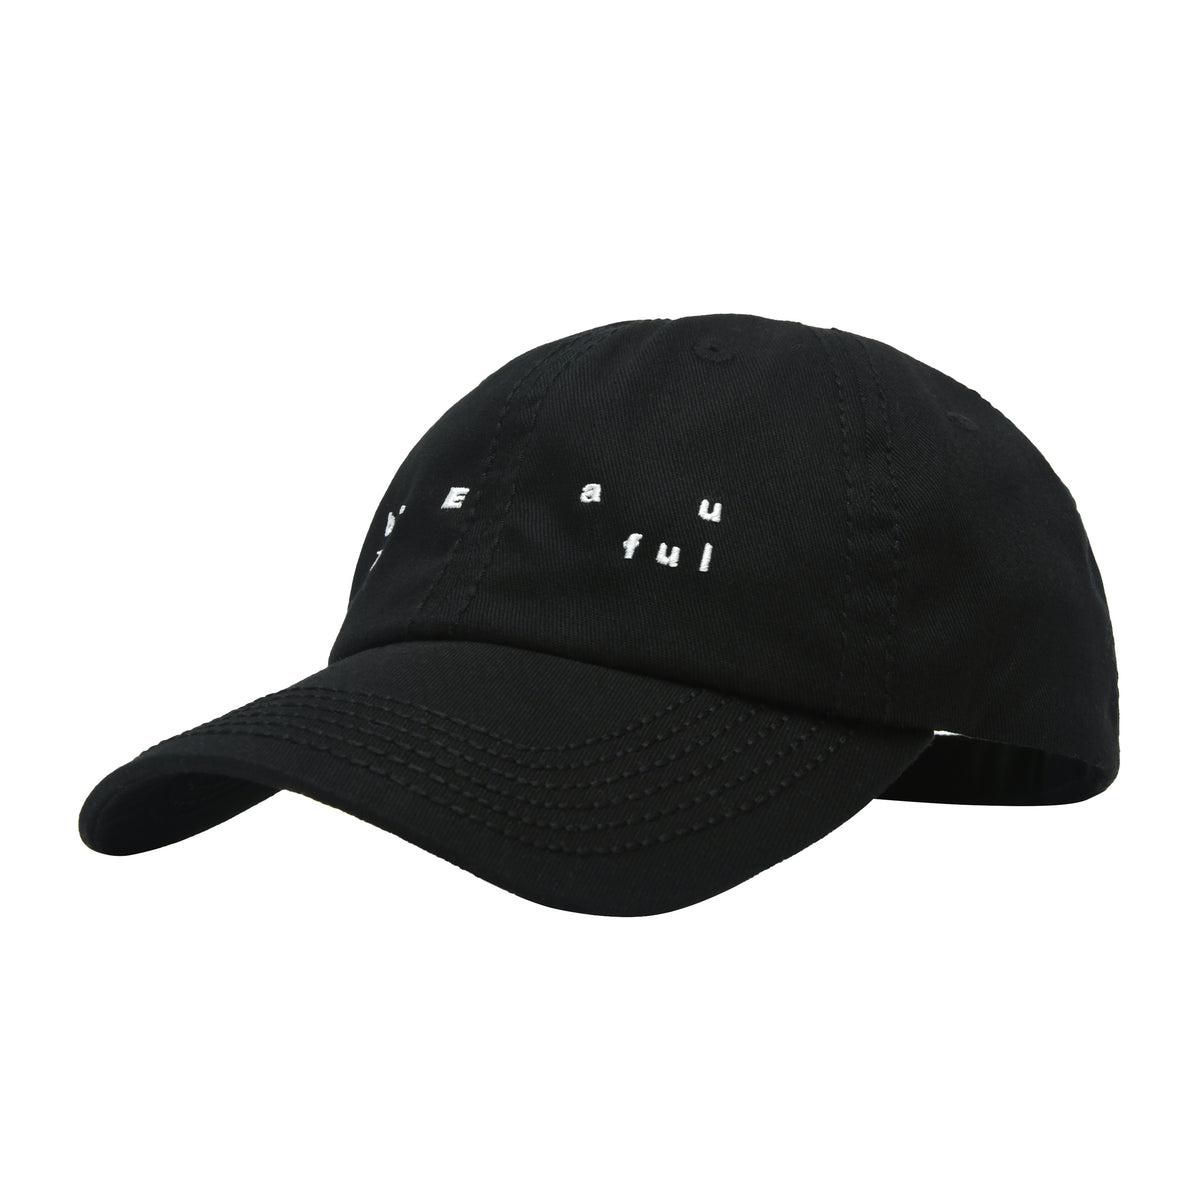 Spirit 6 Panel Hat (Black/White)